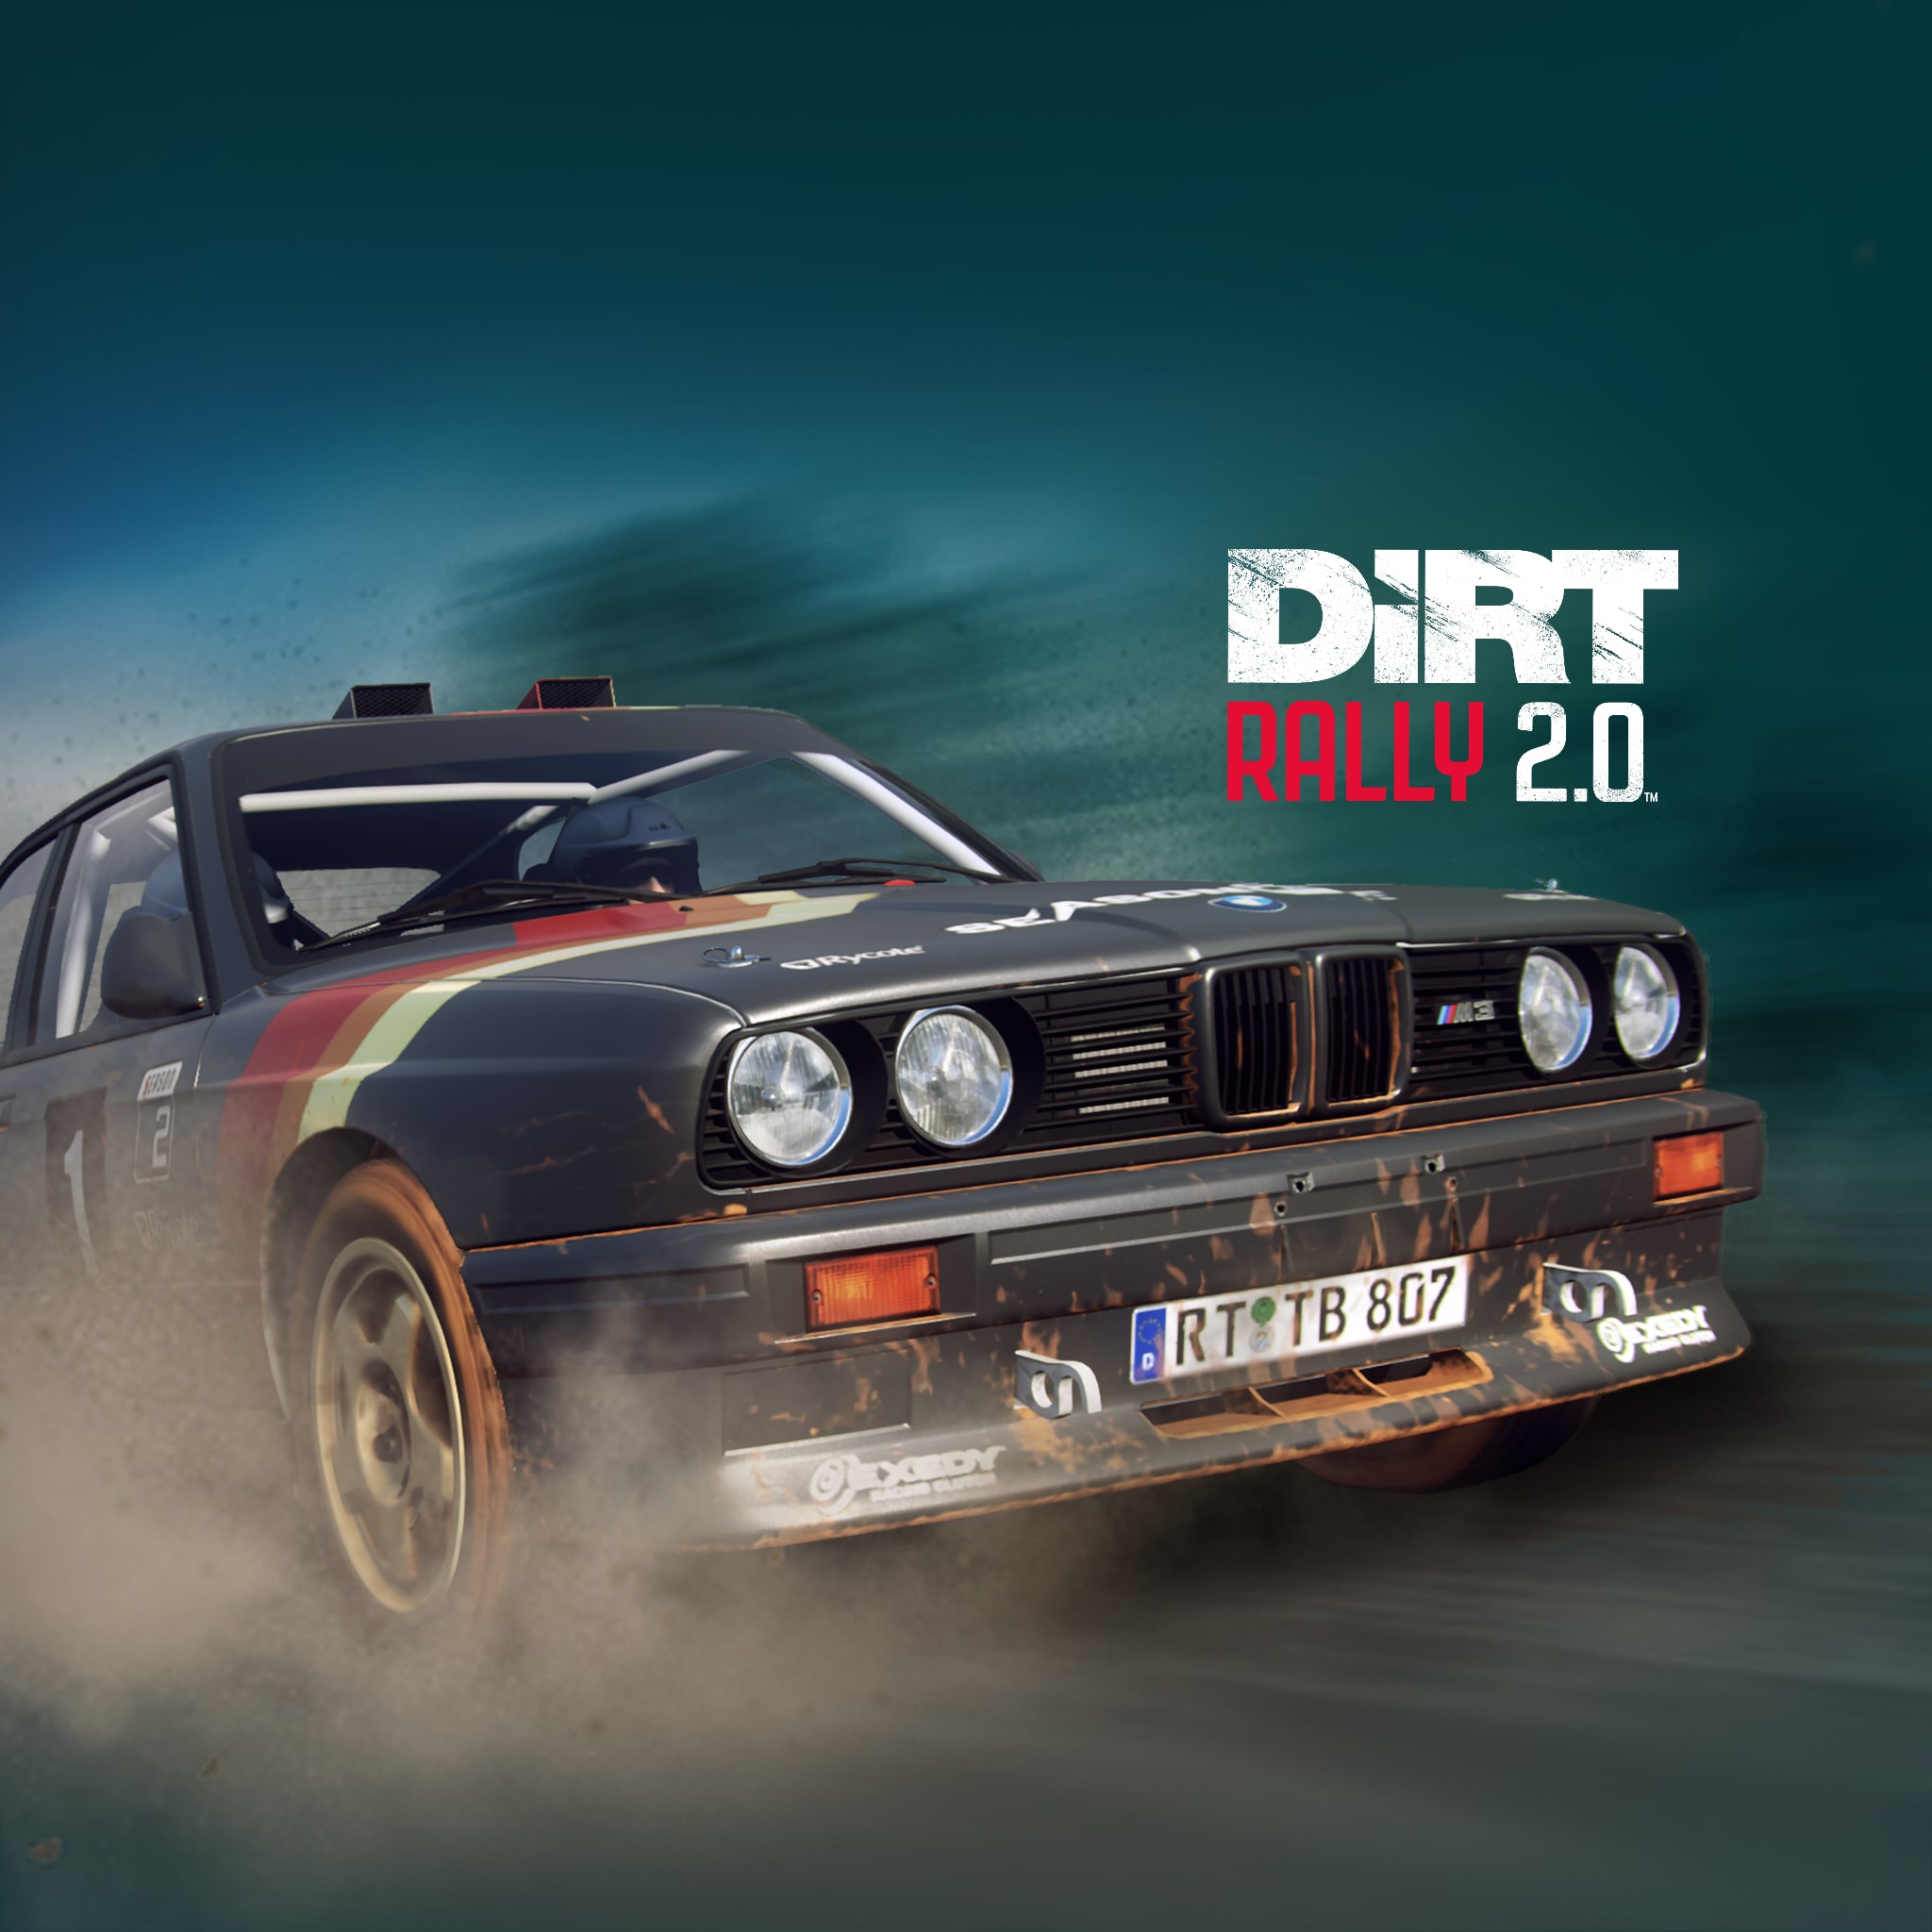 DiRT Rally 2.0 - Season 2 – Stage 3 liveries 